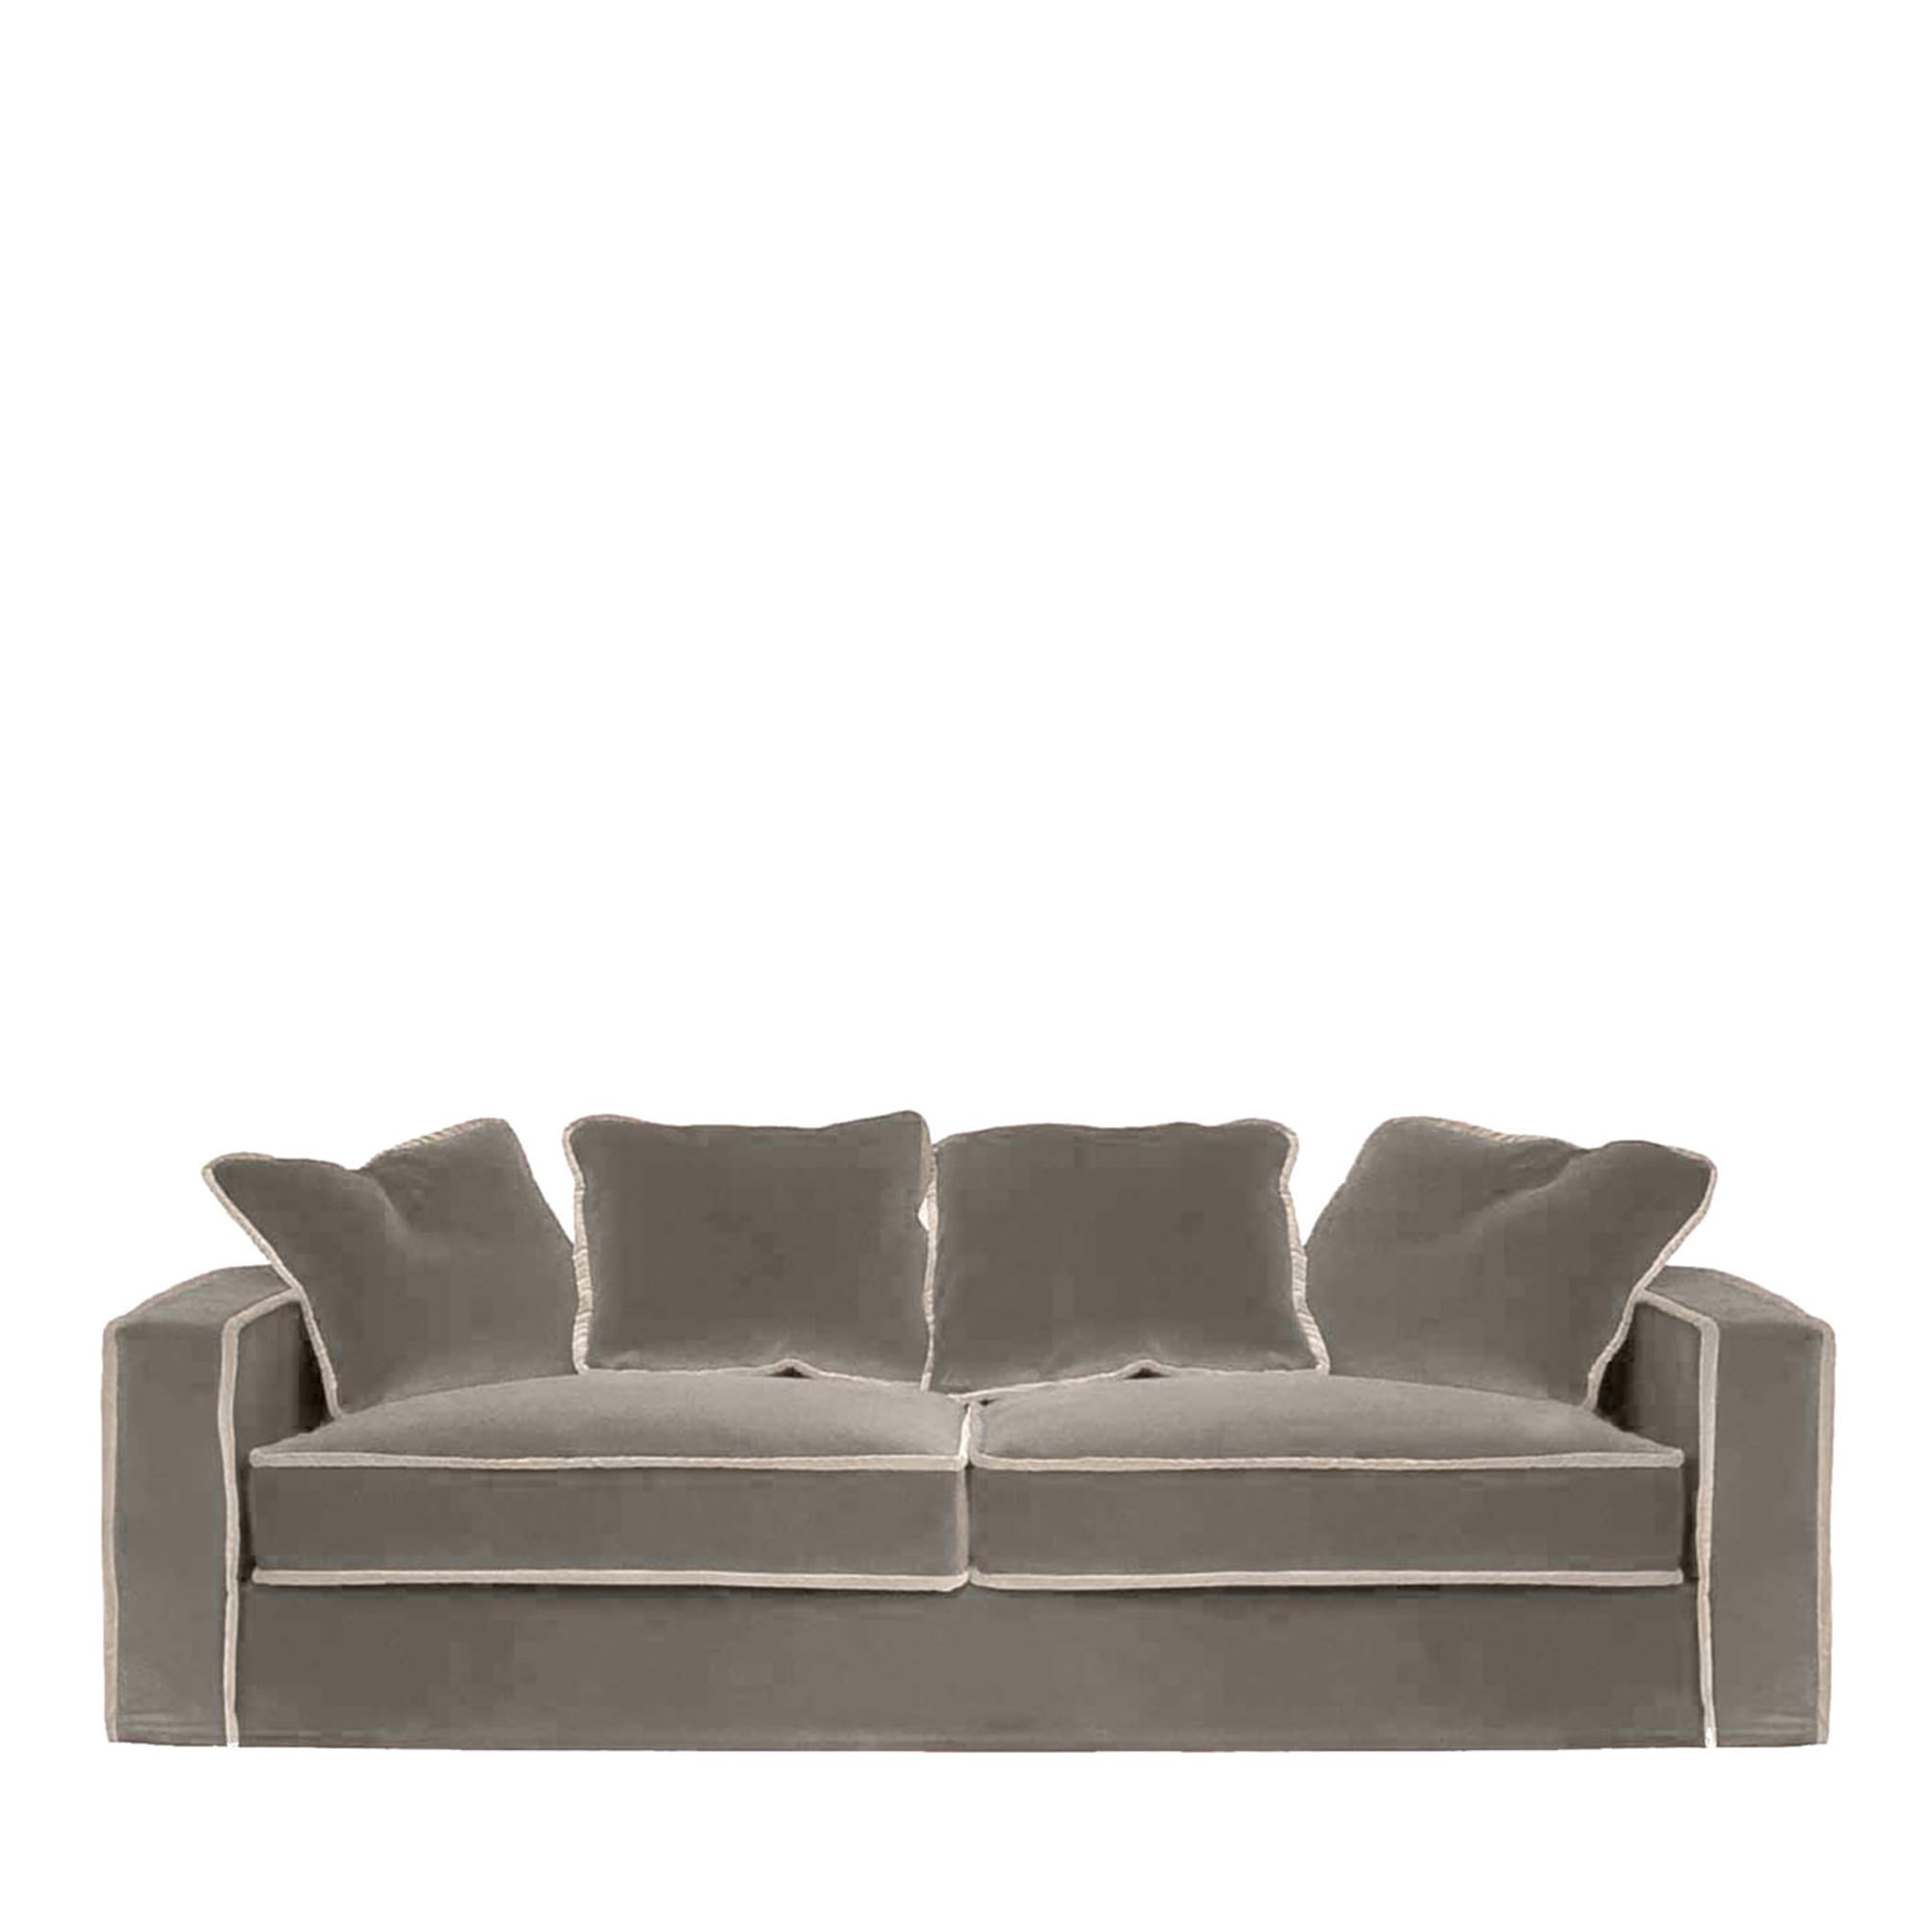 Rafaella Grey & Taupe Velvet 3 Seater Sofa - Main view